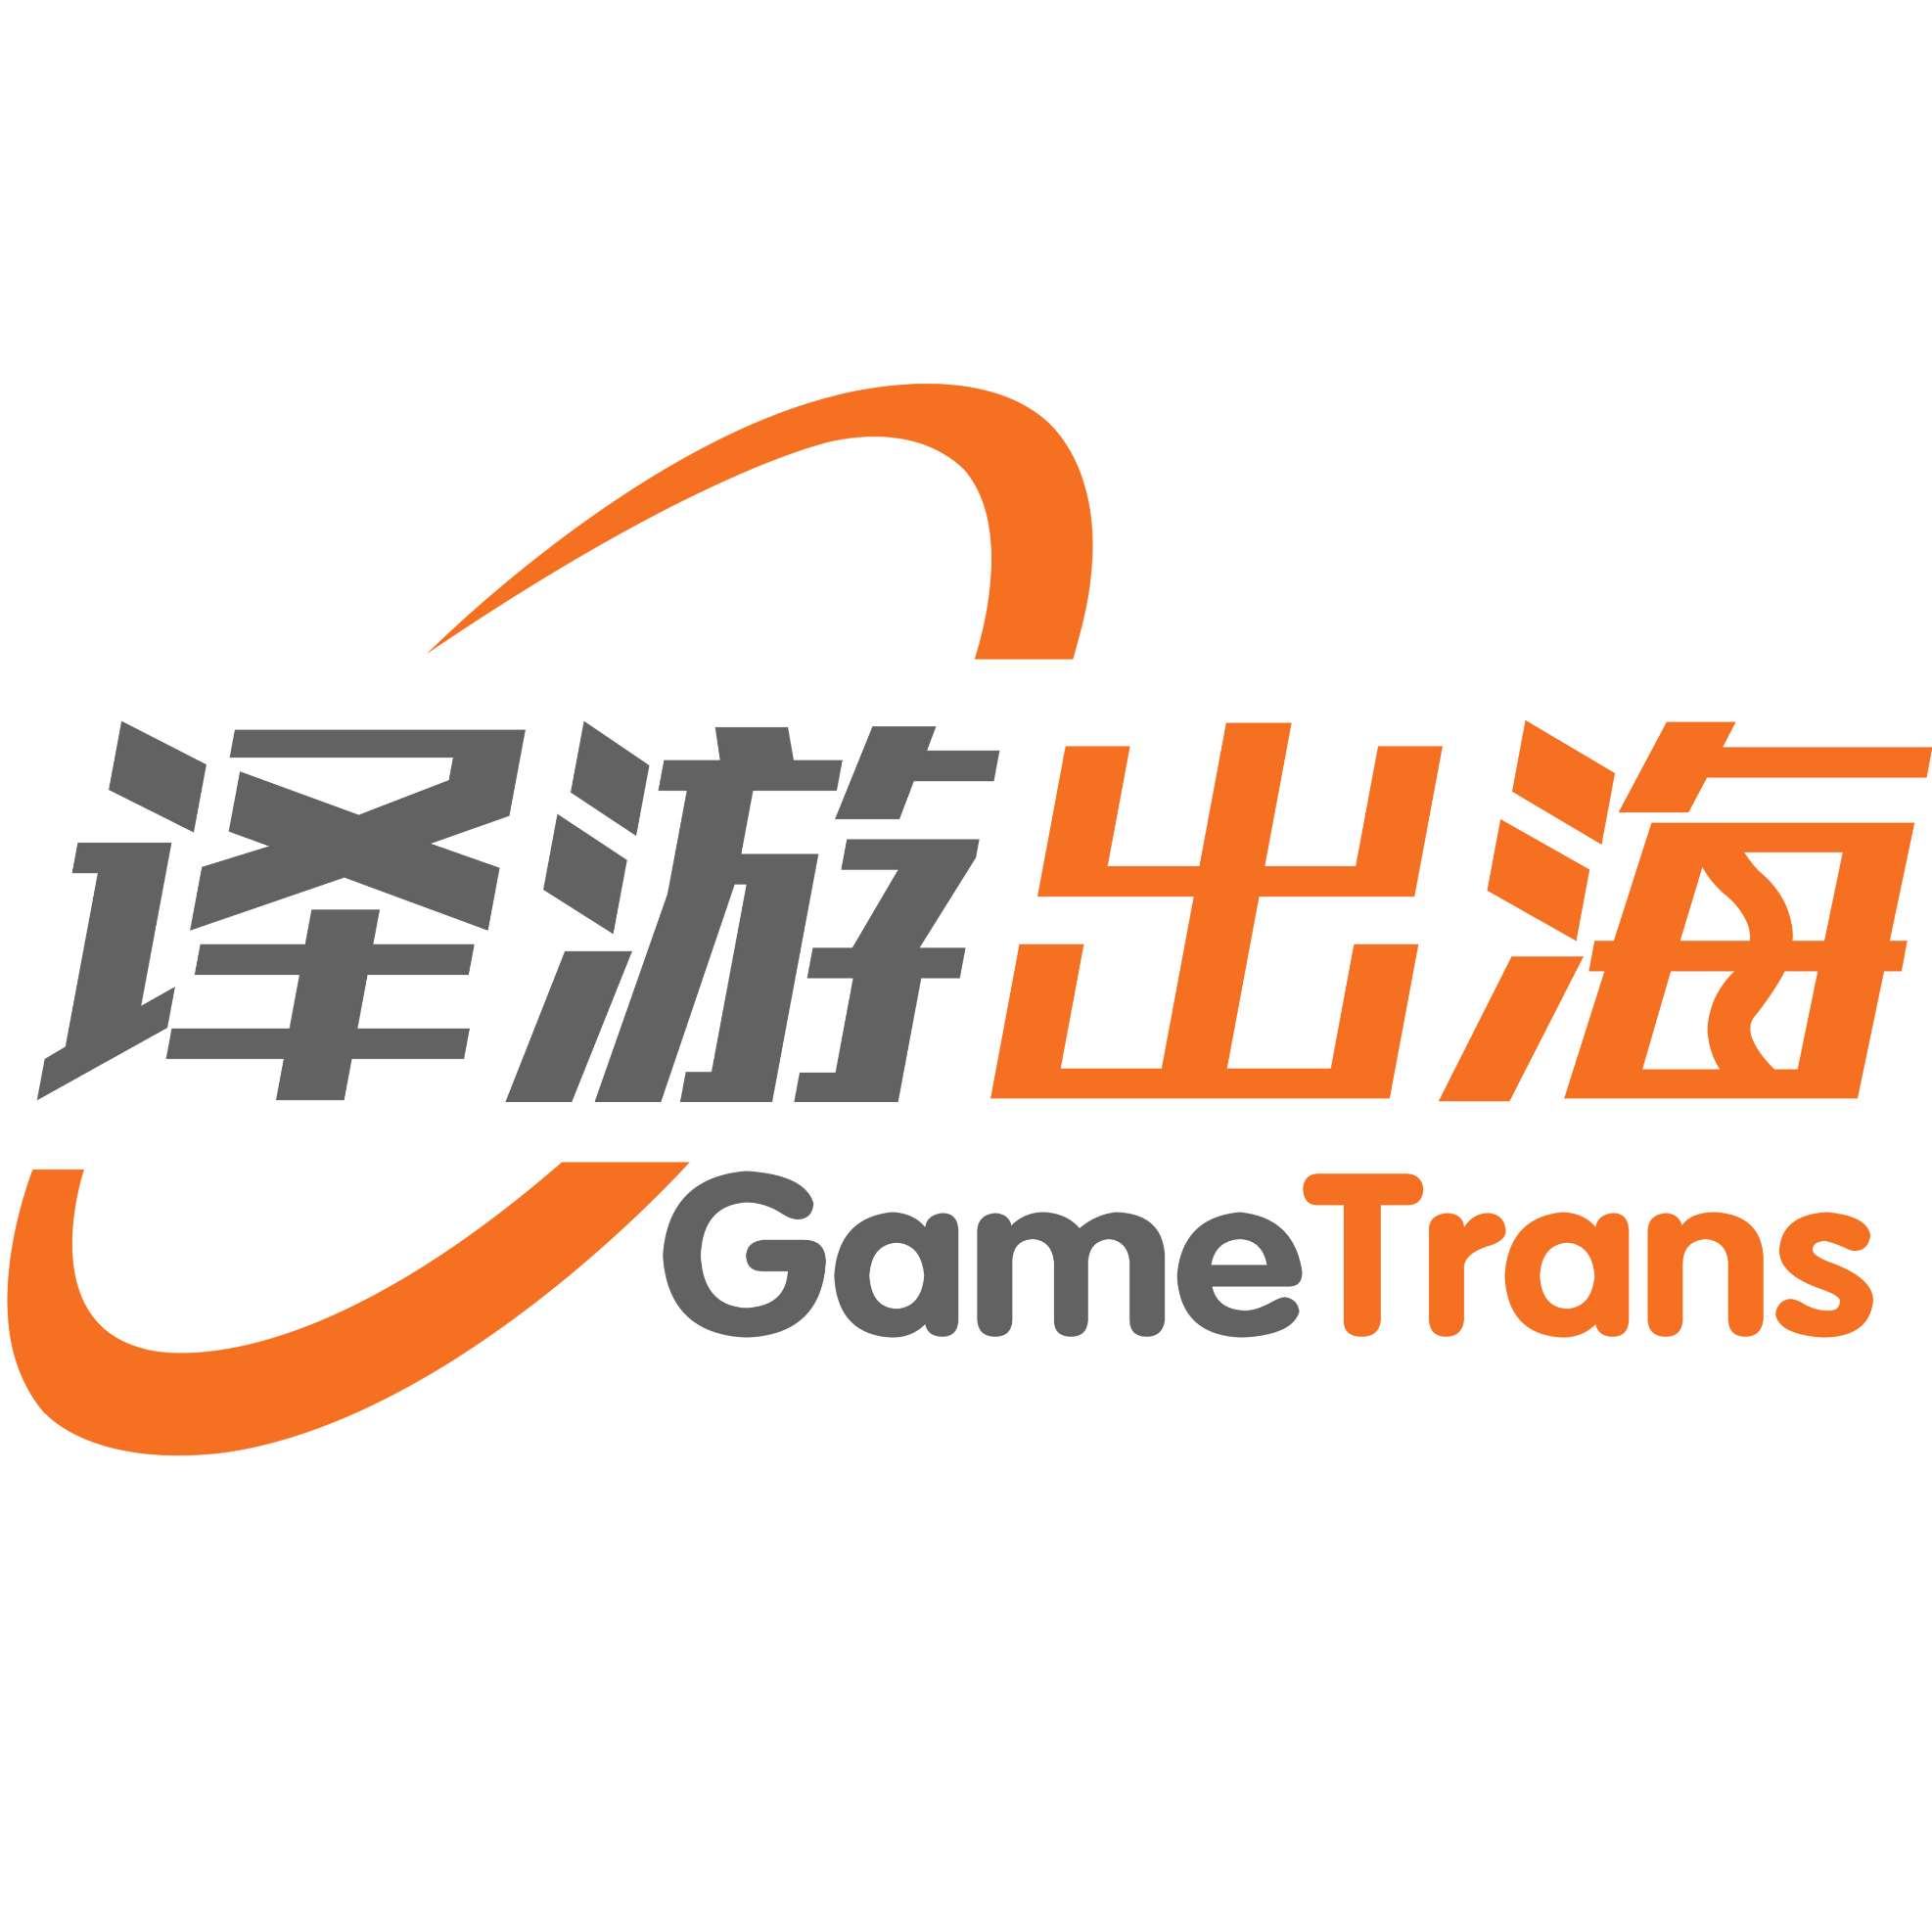 GameTrans Logo